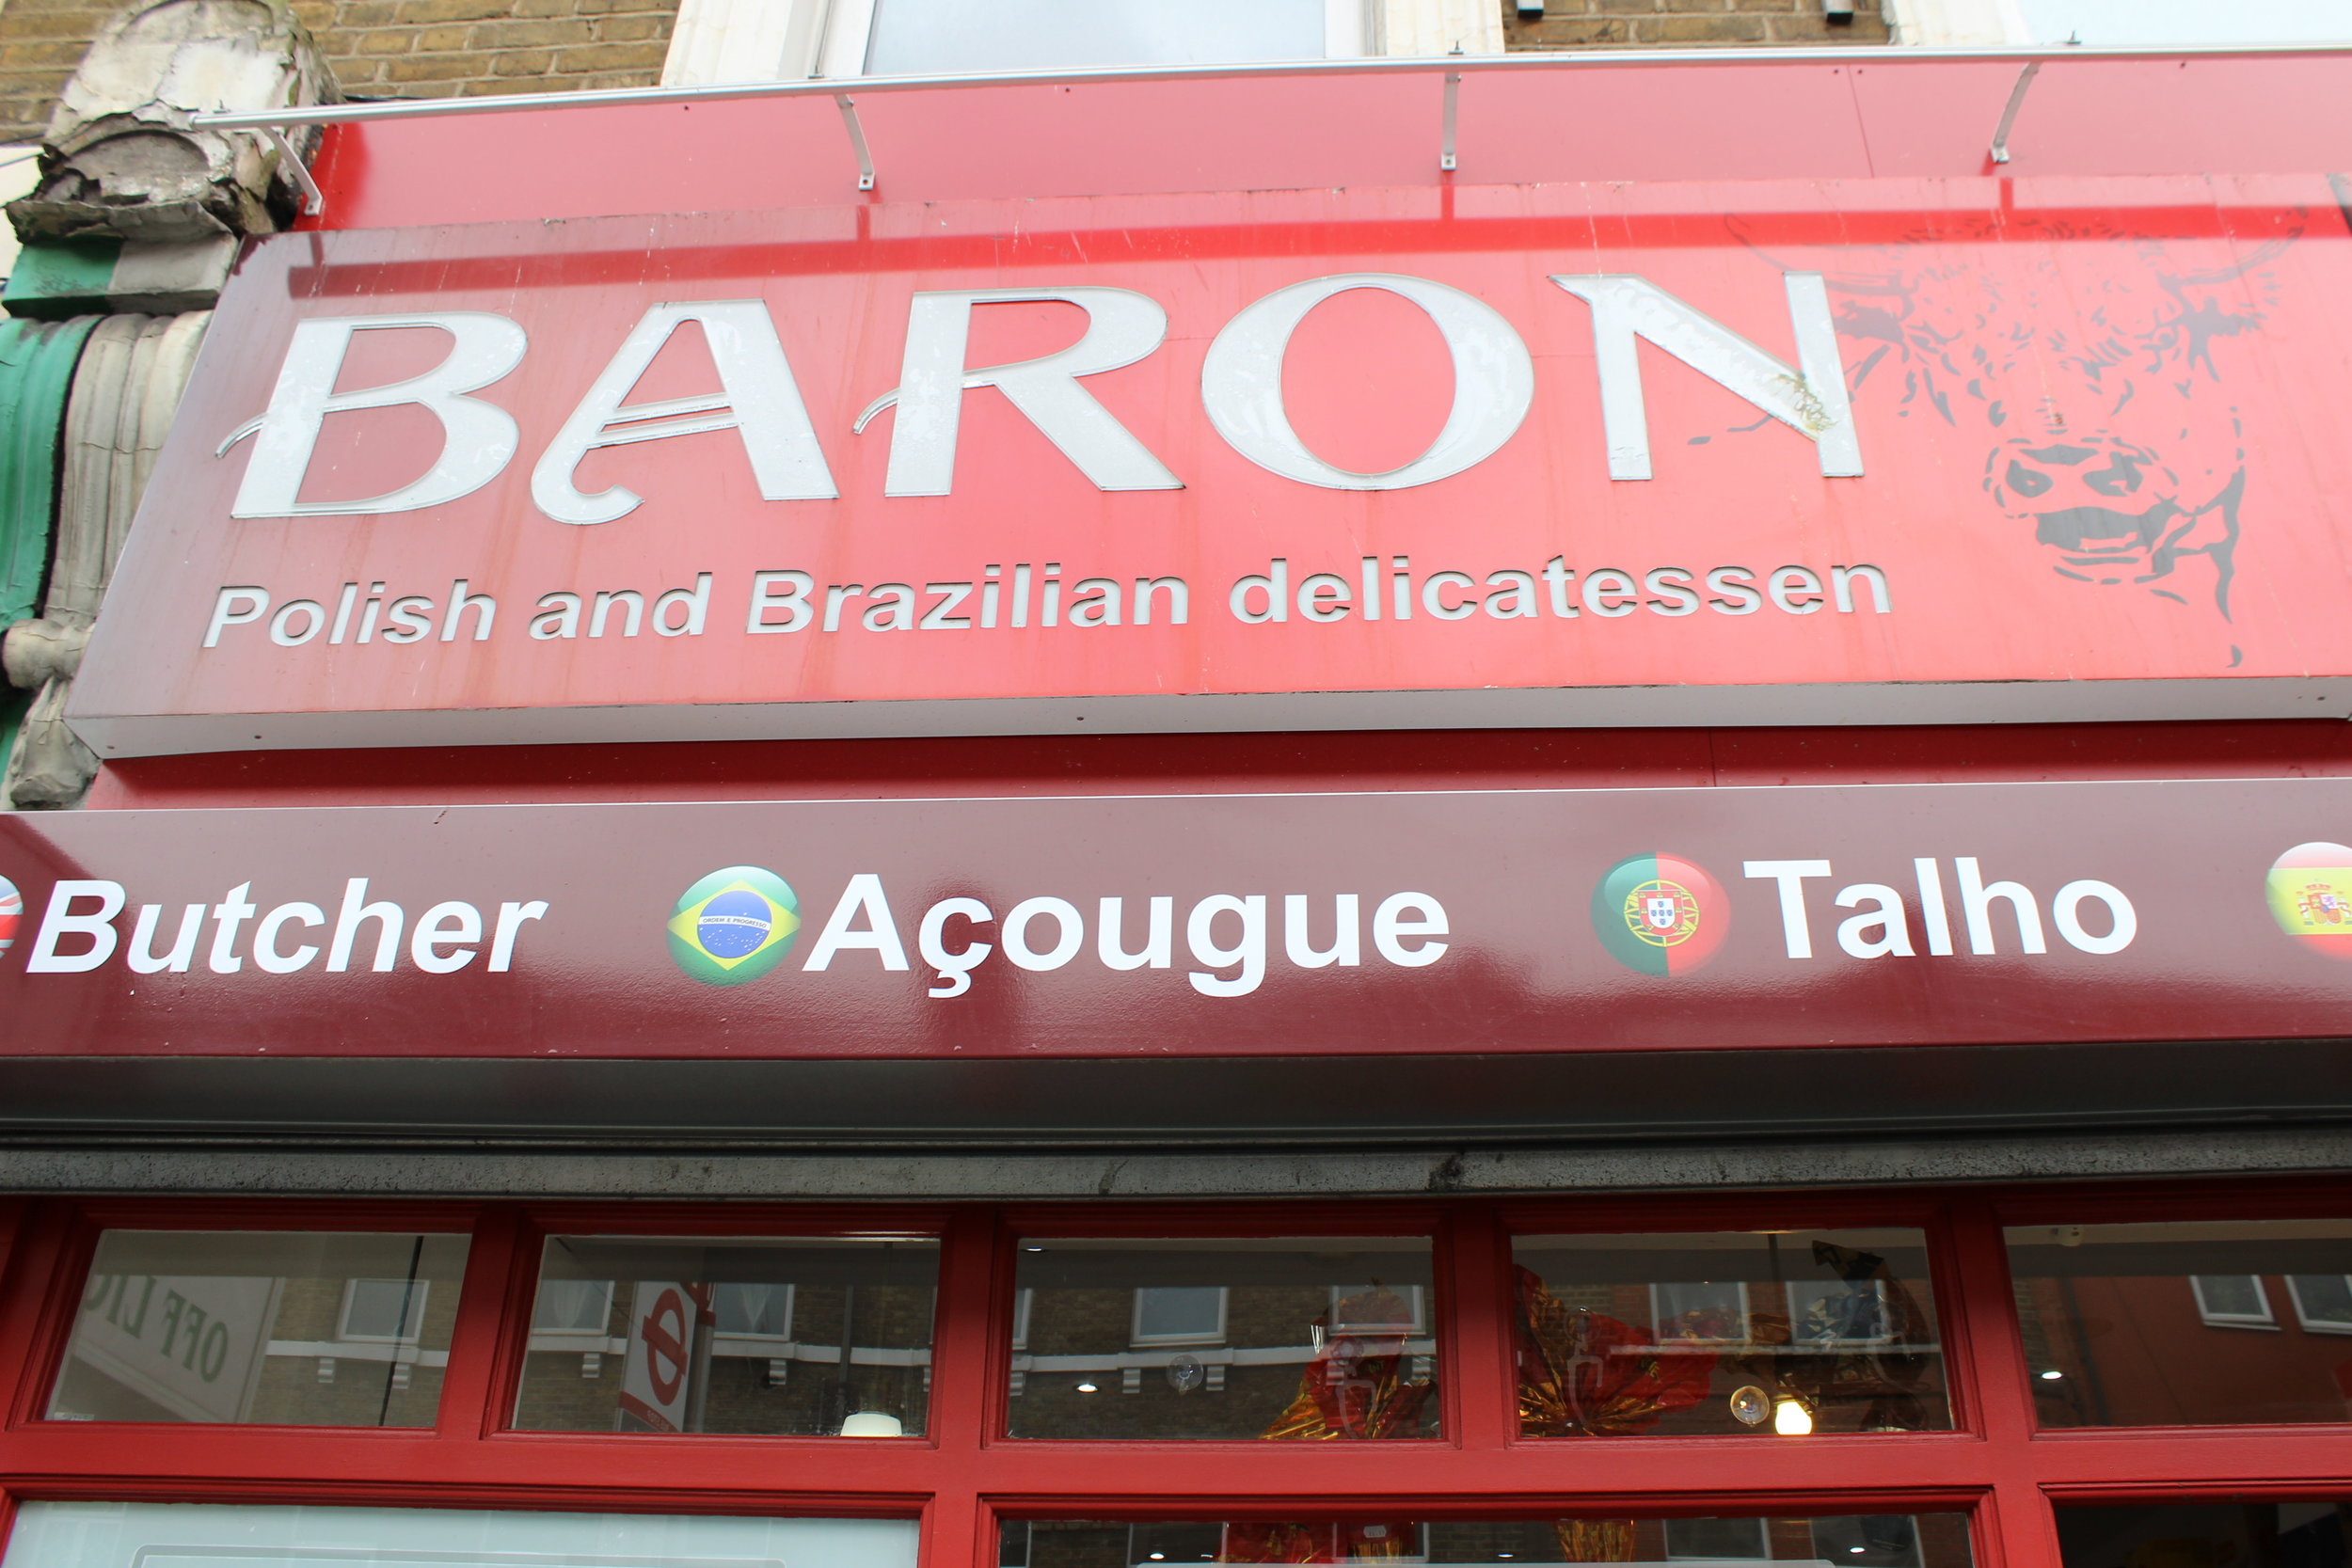 Baron Polish & Brazilian Deli and Butcher in West Norwood South London Club